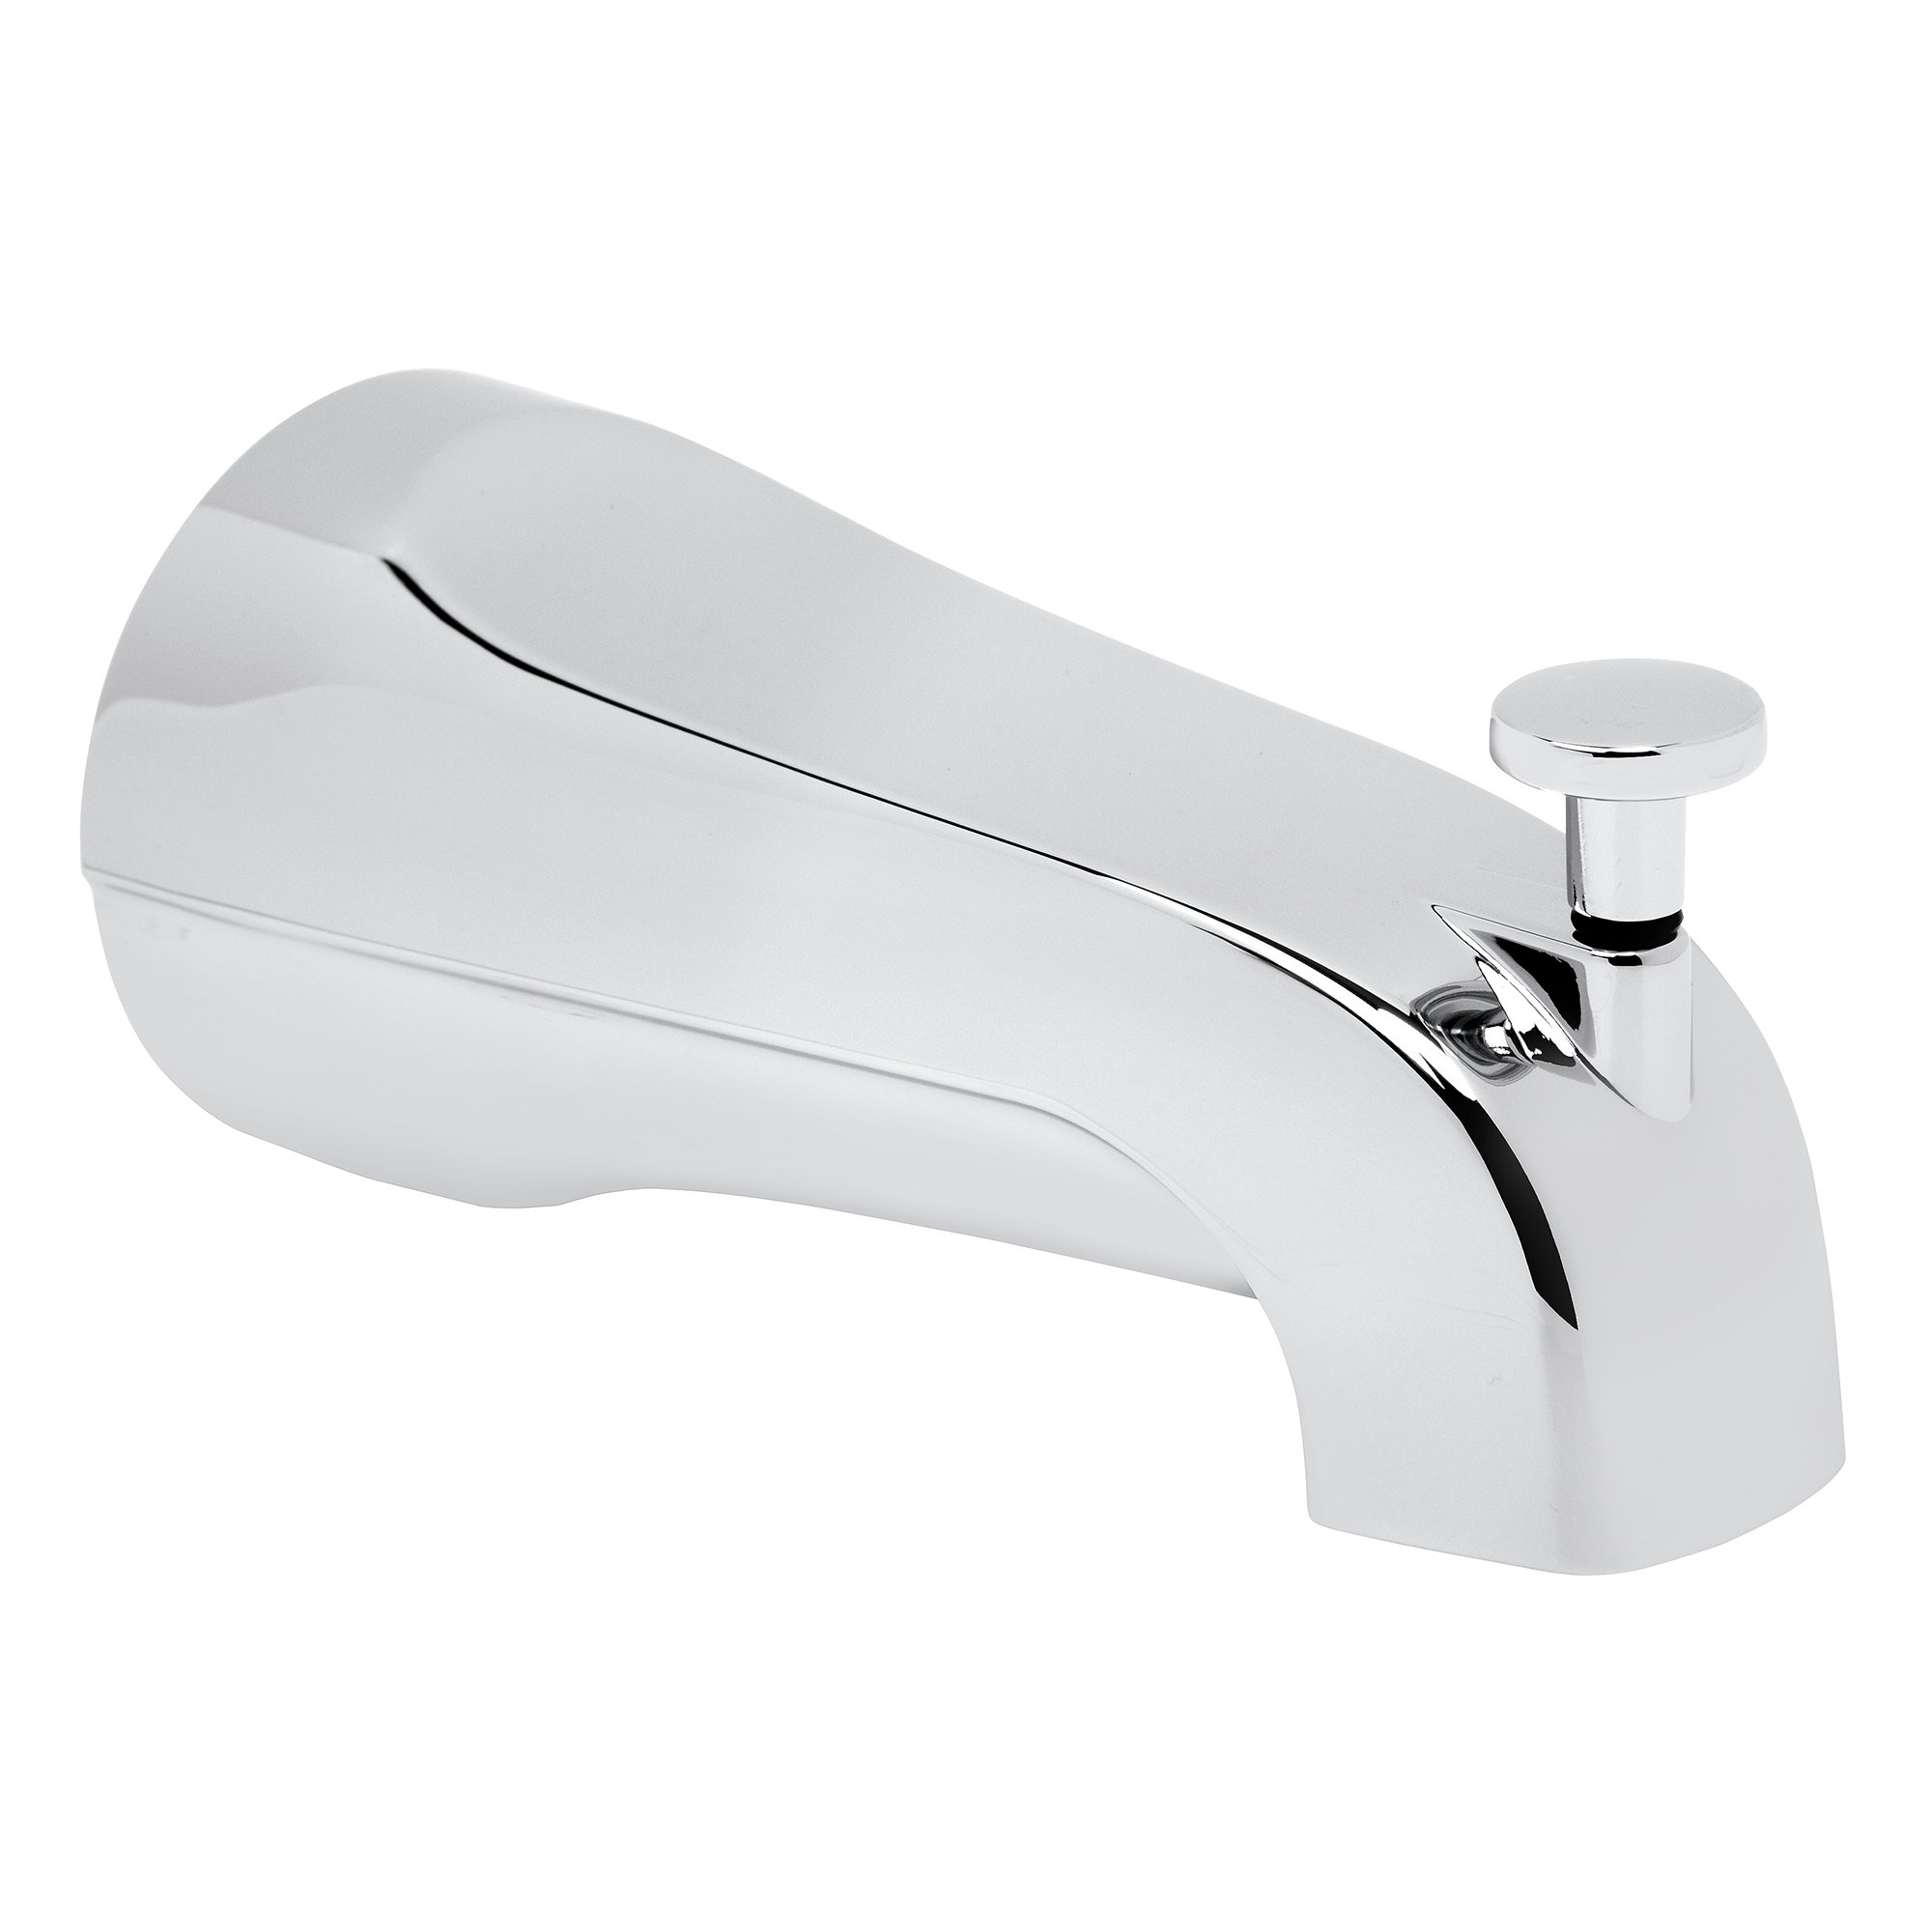 American Standard 8888026.002 Bath Slip-On Diverter Tub Spout, 4 in, Polished Chrome (For 1/2